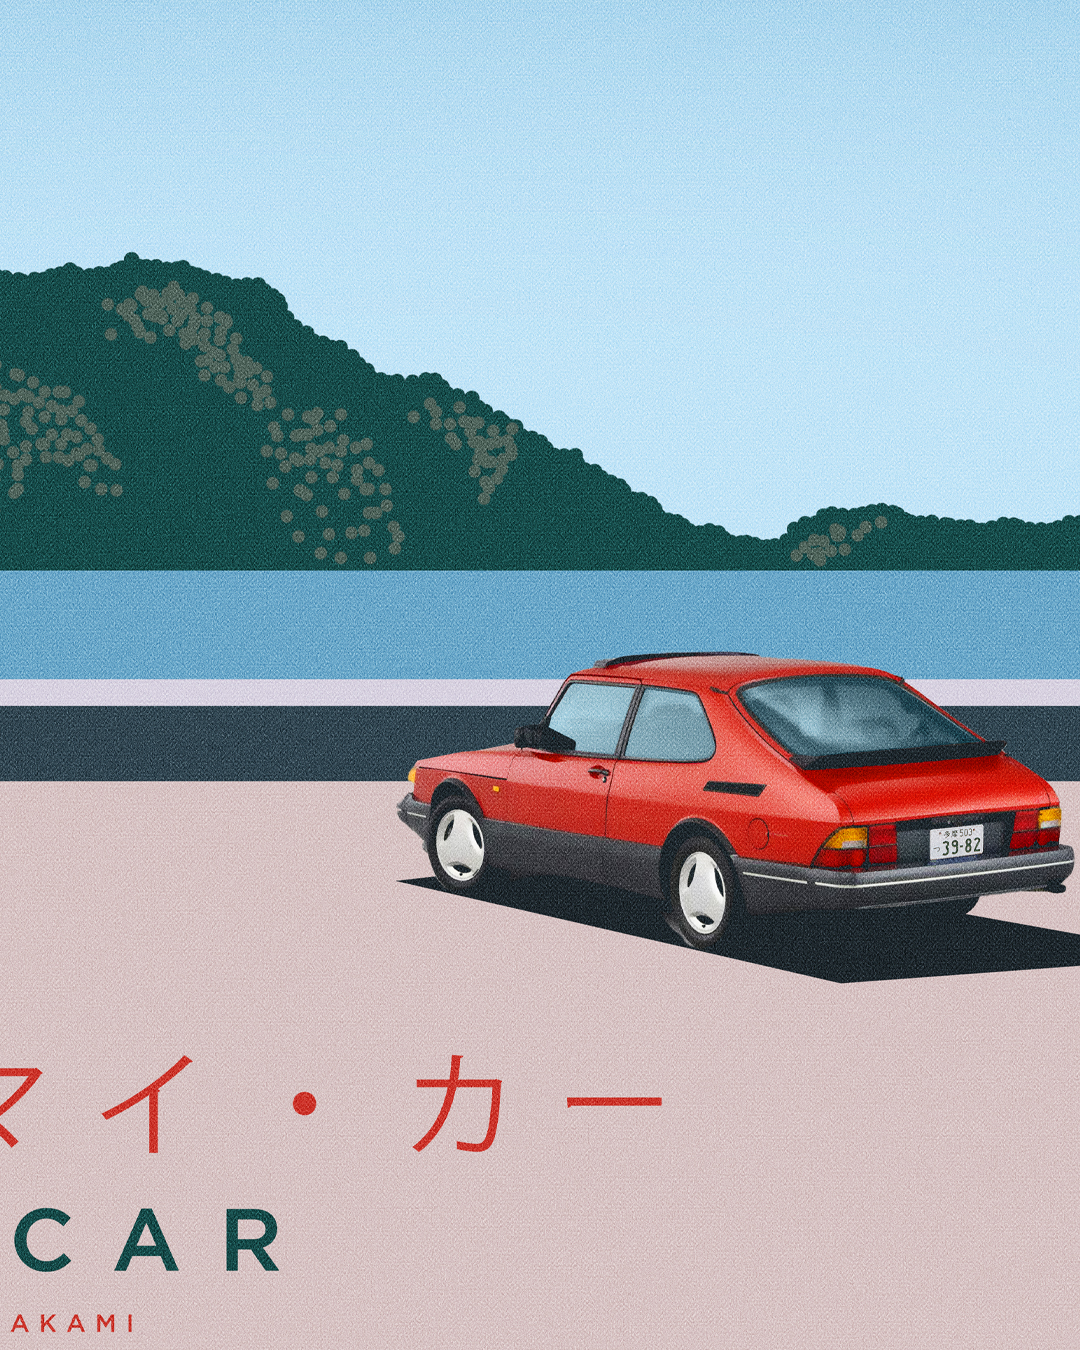 Drive My Car (2021) [in the style of Hiroshi Nagai]